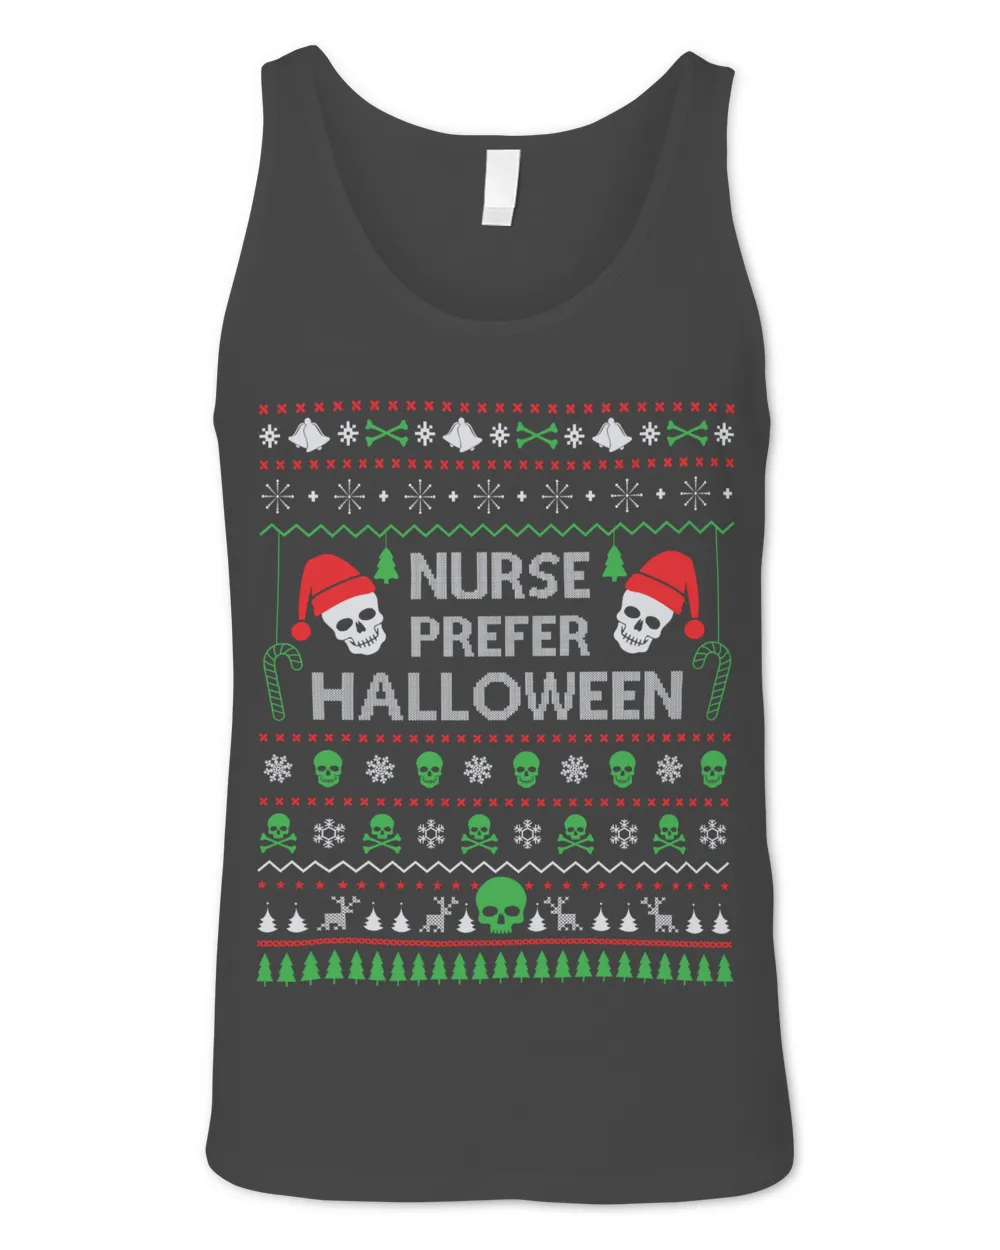 Nurse prefer halloween